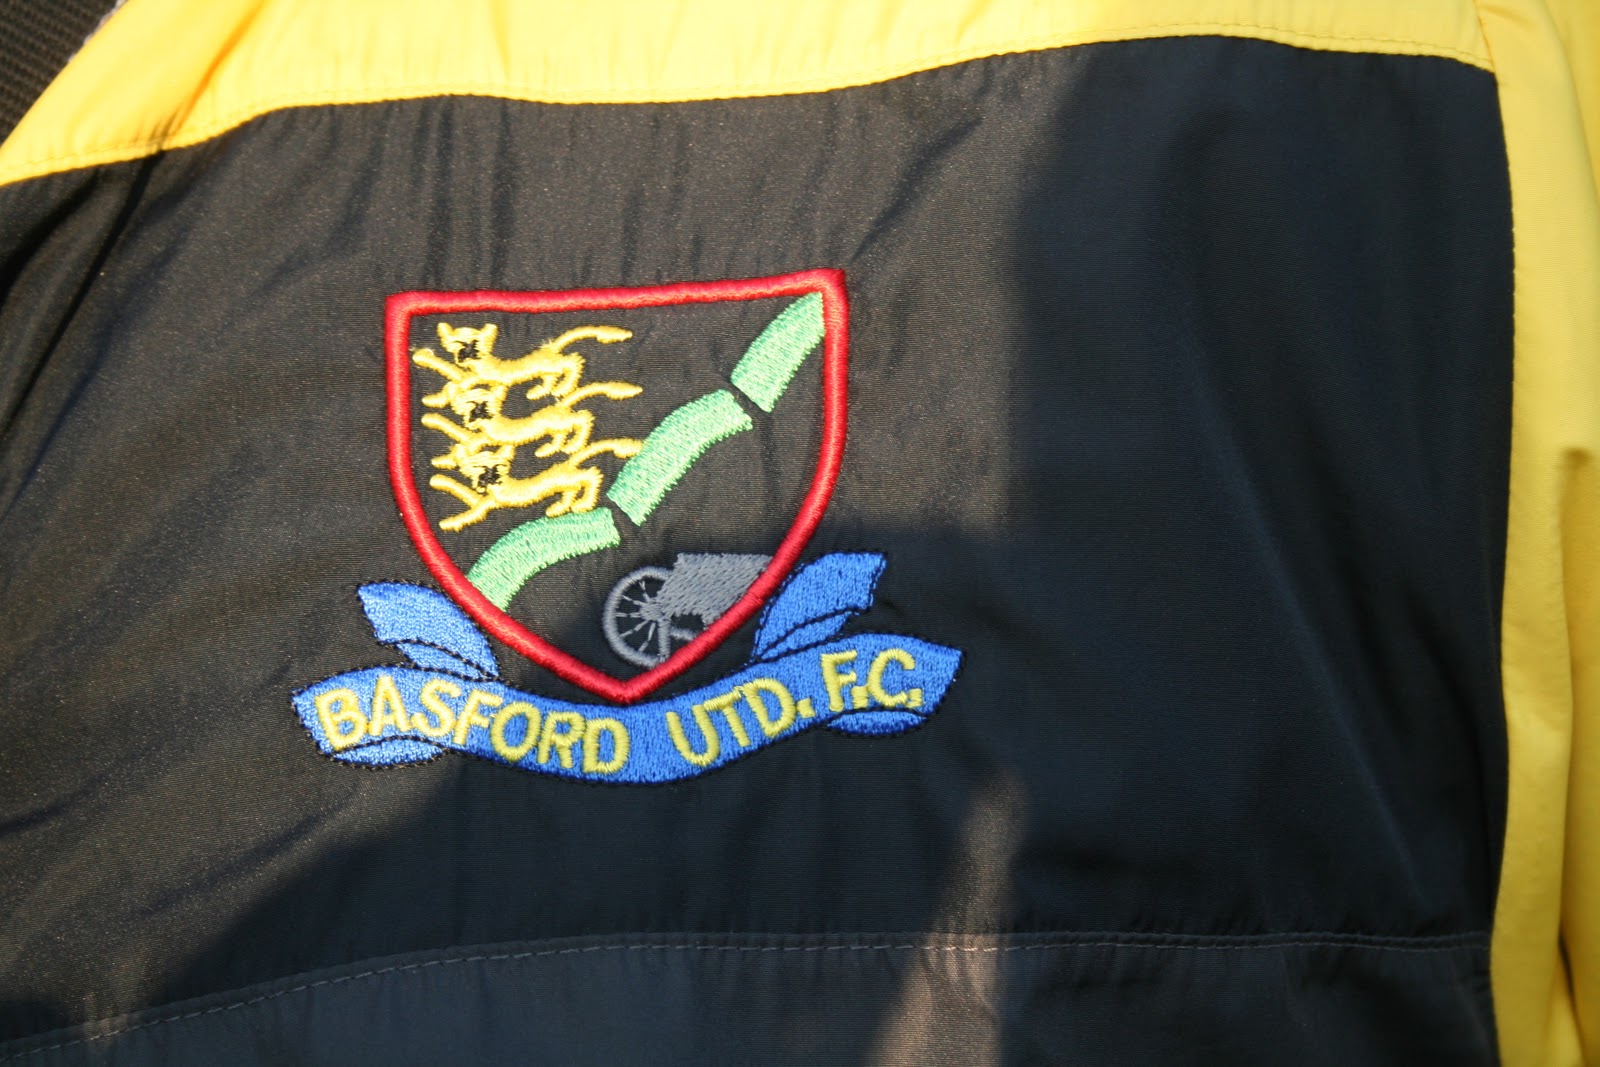 Aroundthegrounds2011-12: Basford United 1 Attenborough FC 01600 x 1067